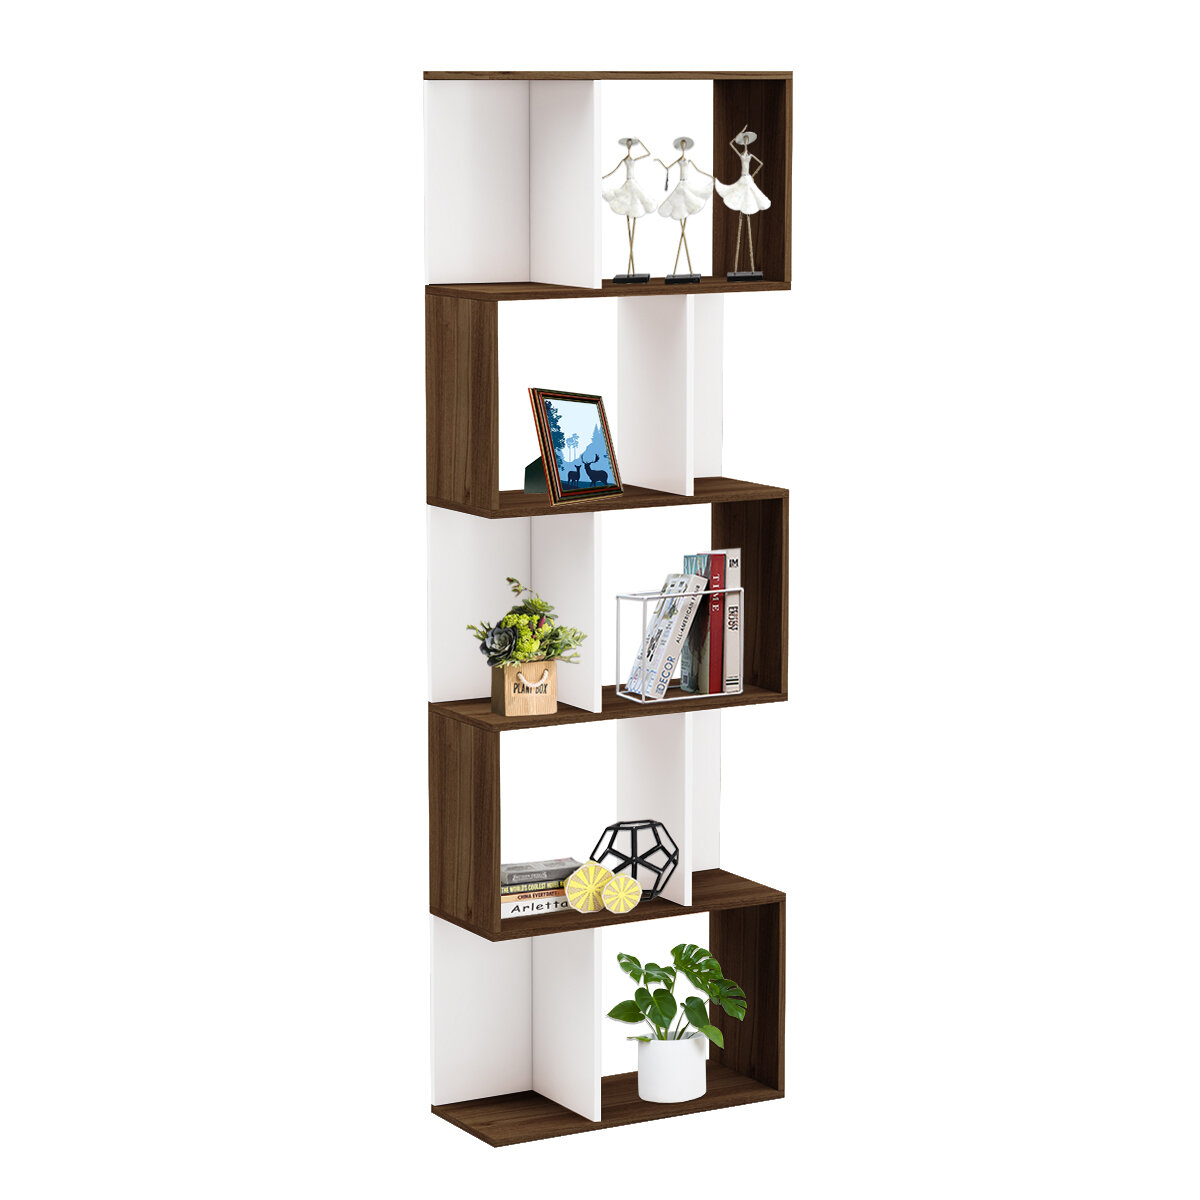 Image of Hoffree Wooden S-Shaped Bookcase Modern Display Shelves Storage Unit Divider